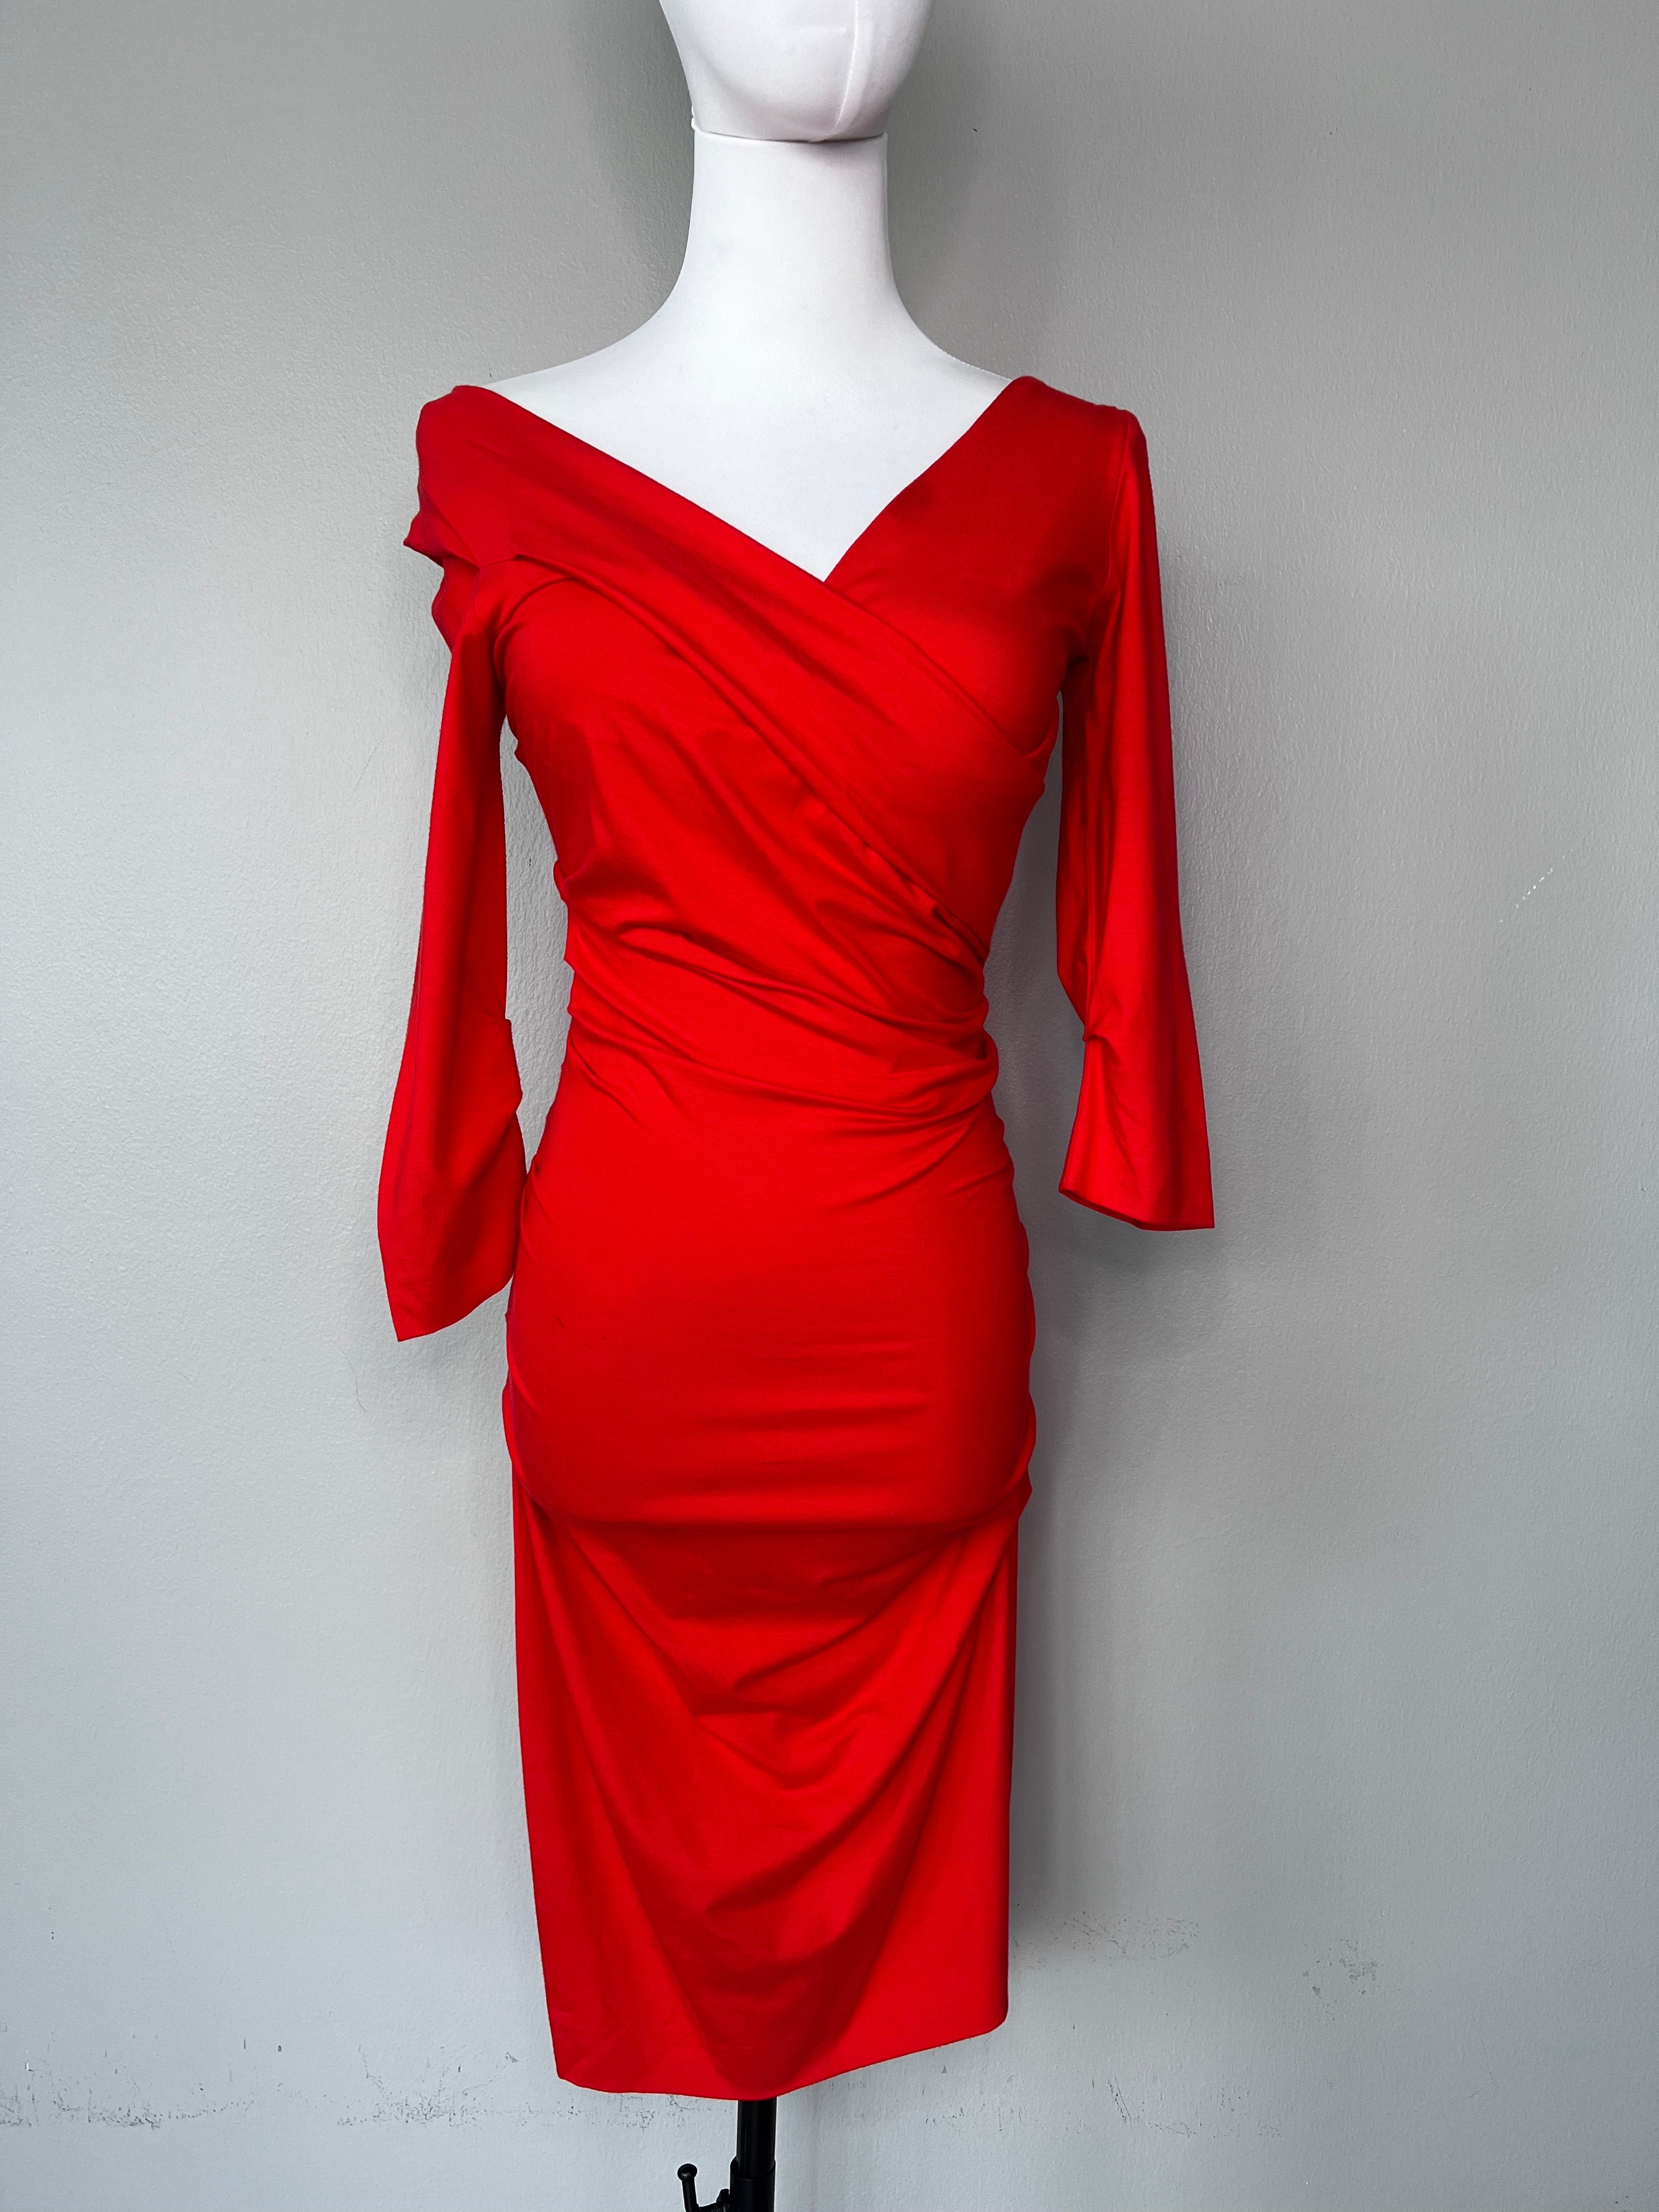 Longsleeve cotton slight off-the-shoulder red dress with scrunch effect on either side. - DIANE VON FURSTENBERG